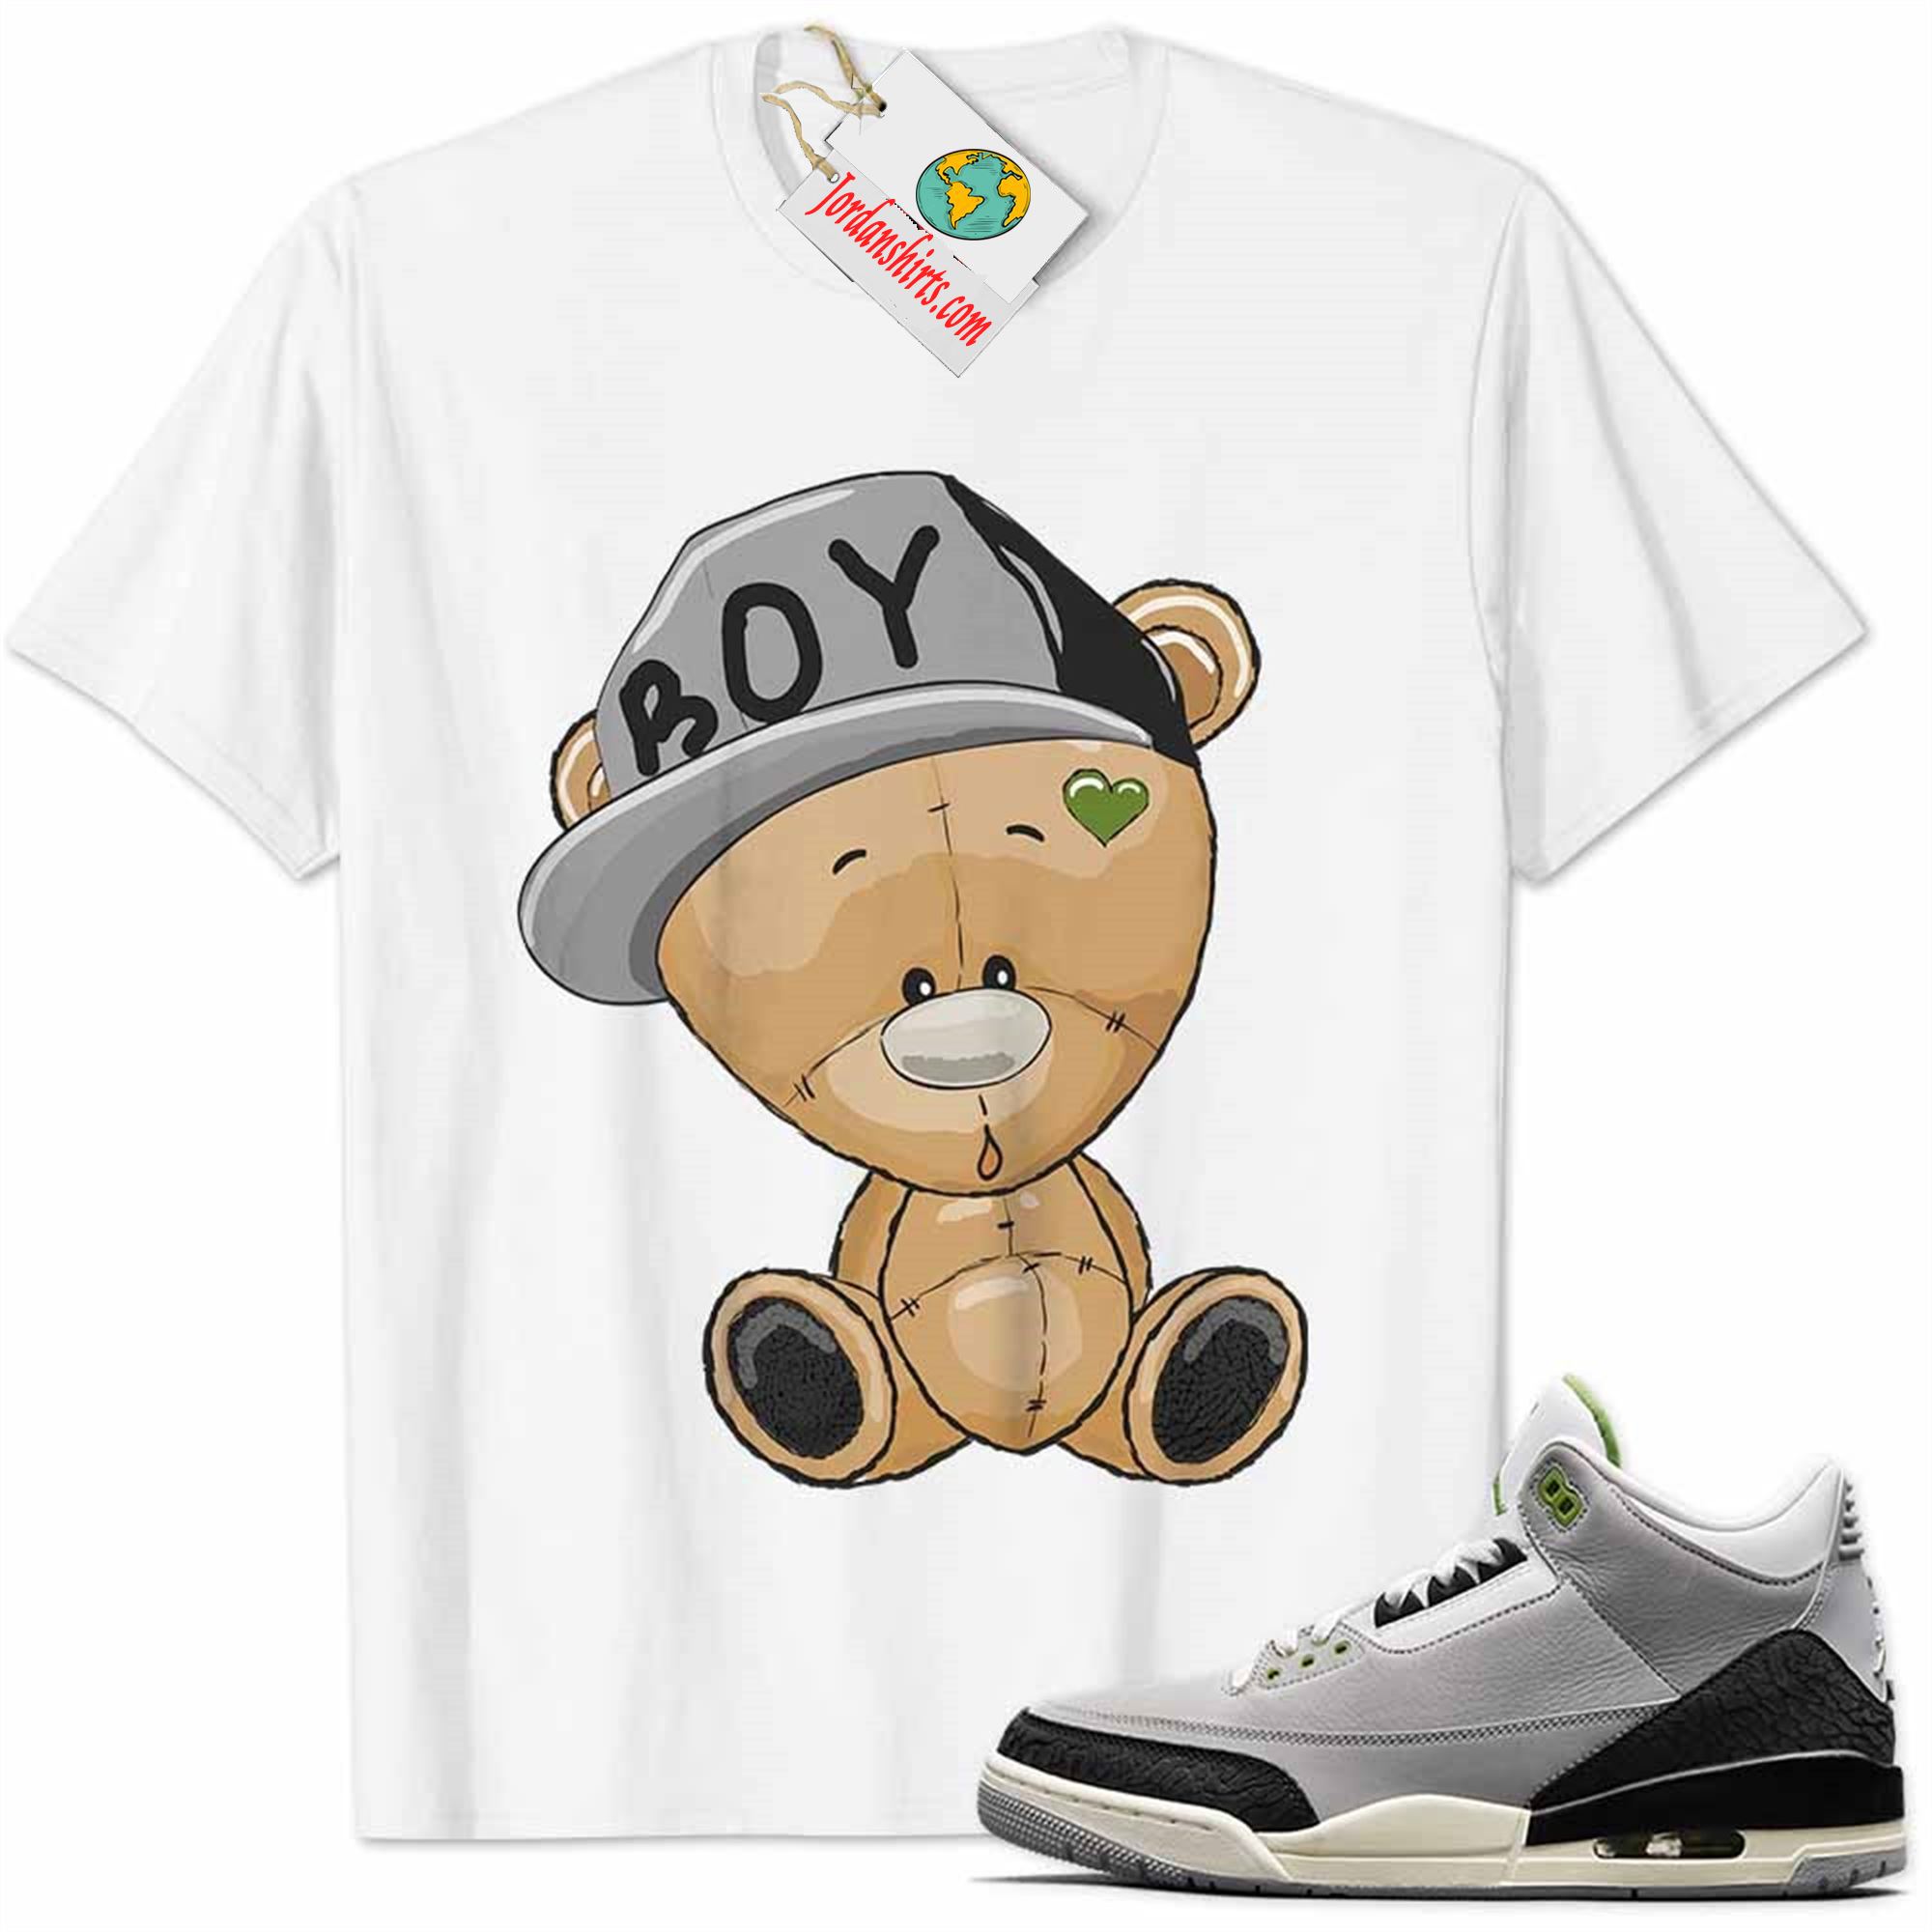 Jordan 3 Shirt, Jordan 3 Chlorophyll Shirt Cute Baby Teddy Bear White Size Up To 5xl